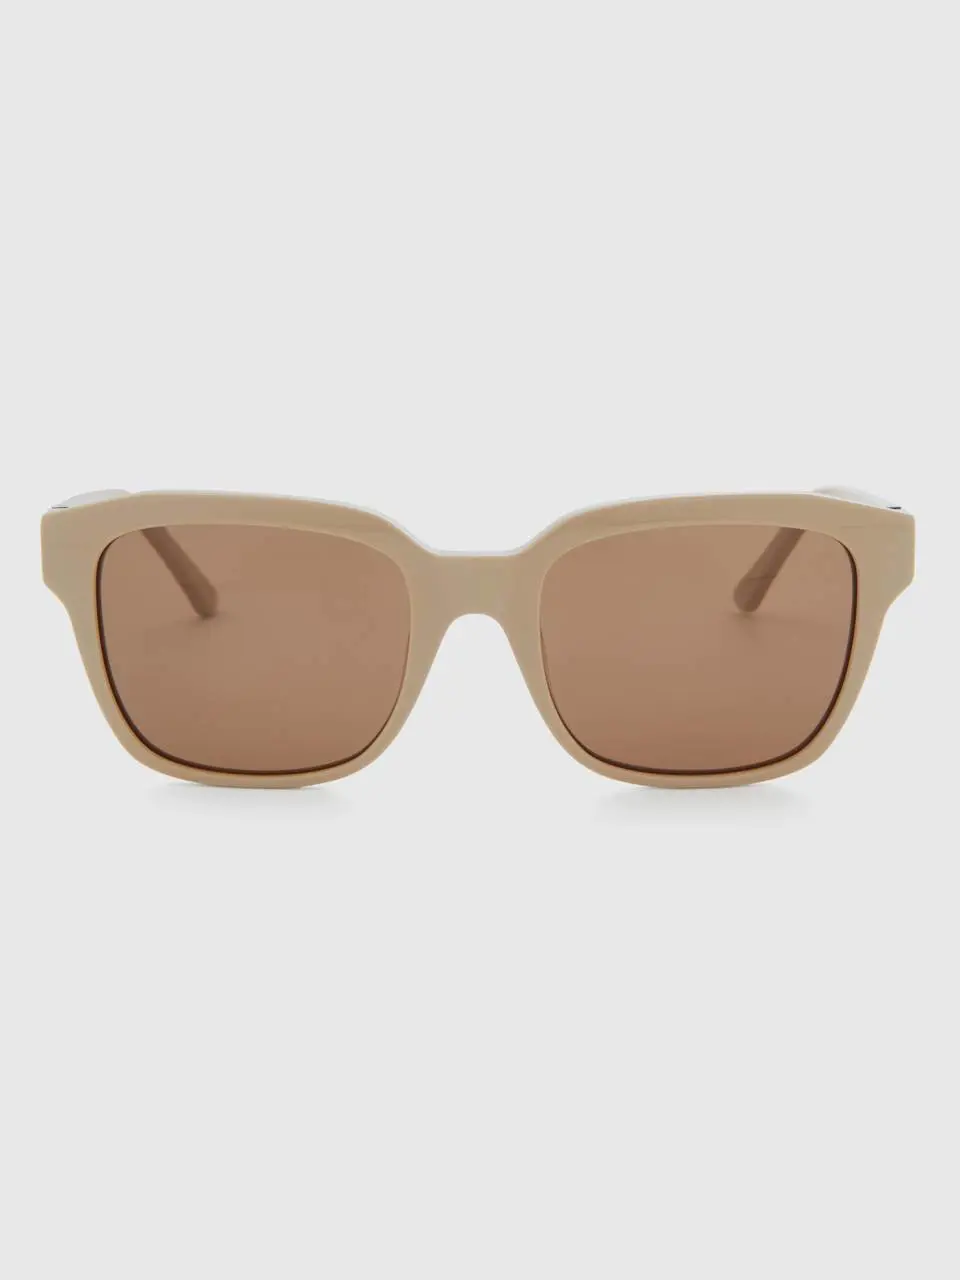 Benetton beige sunglasses with logo. 1